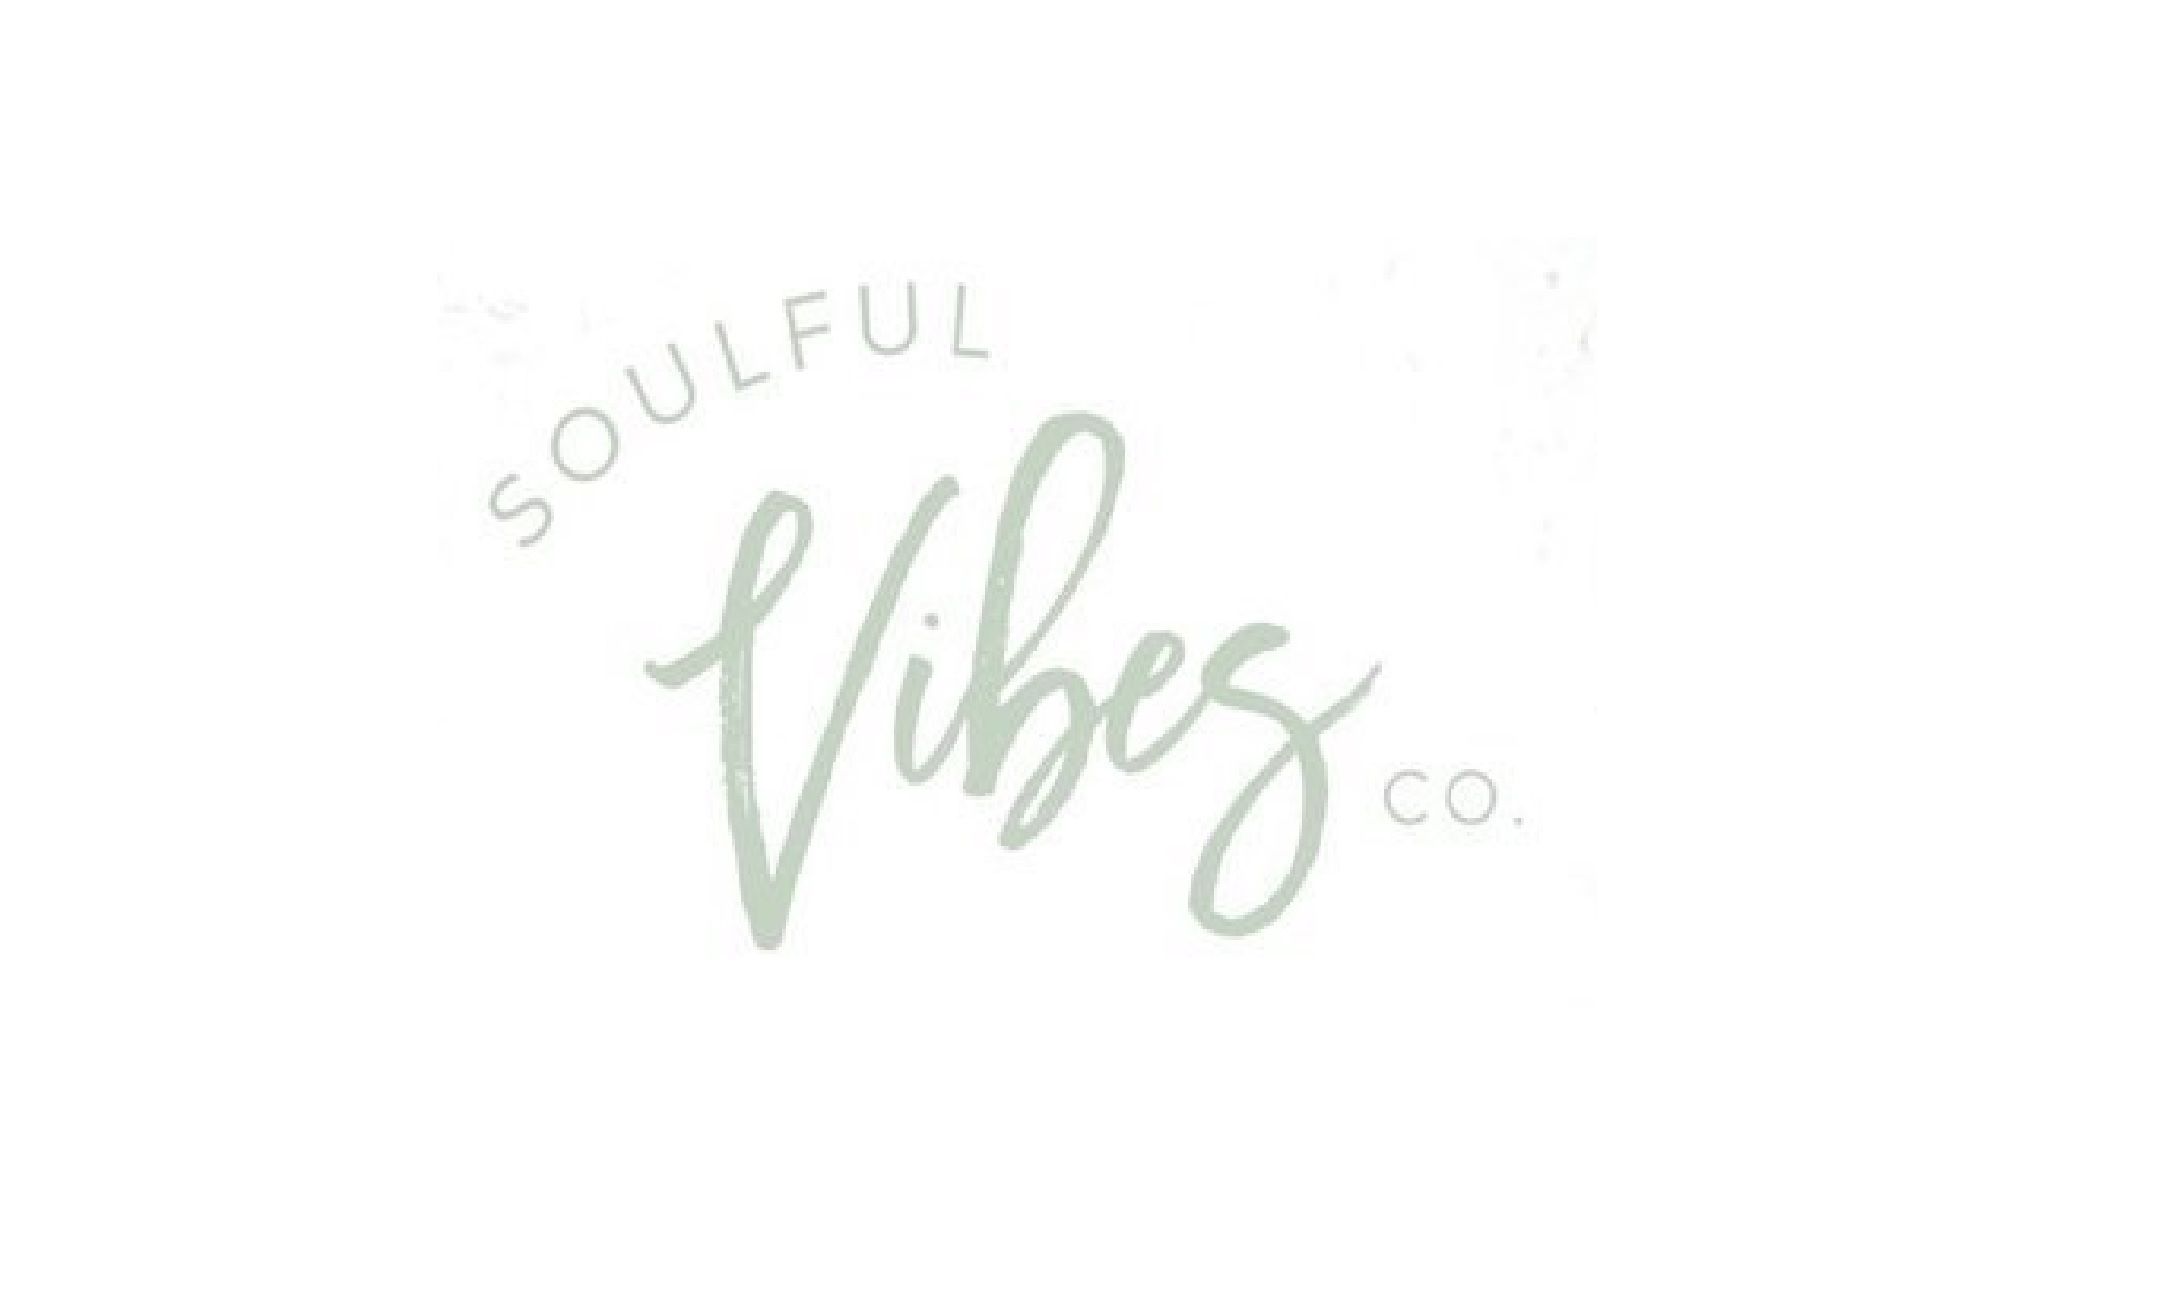 Soulful Vibes Co. & Soulfulvibesco